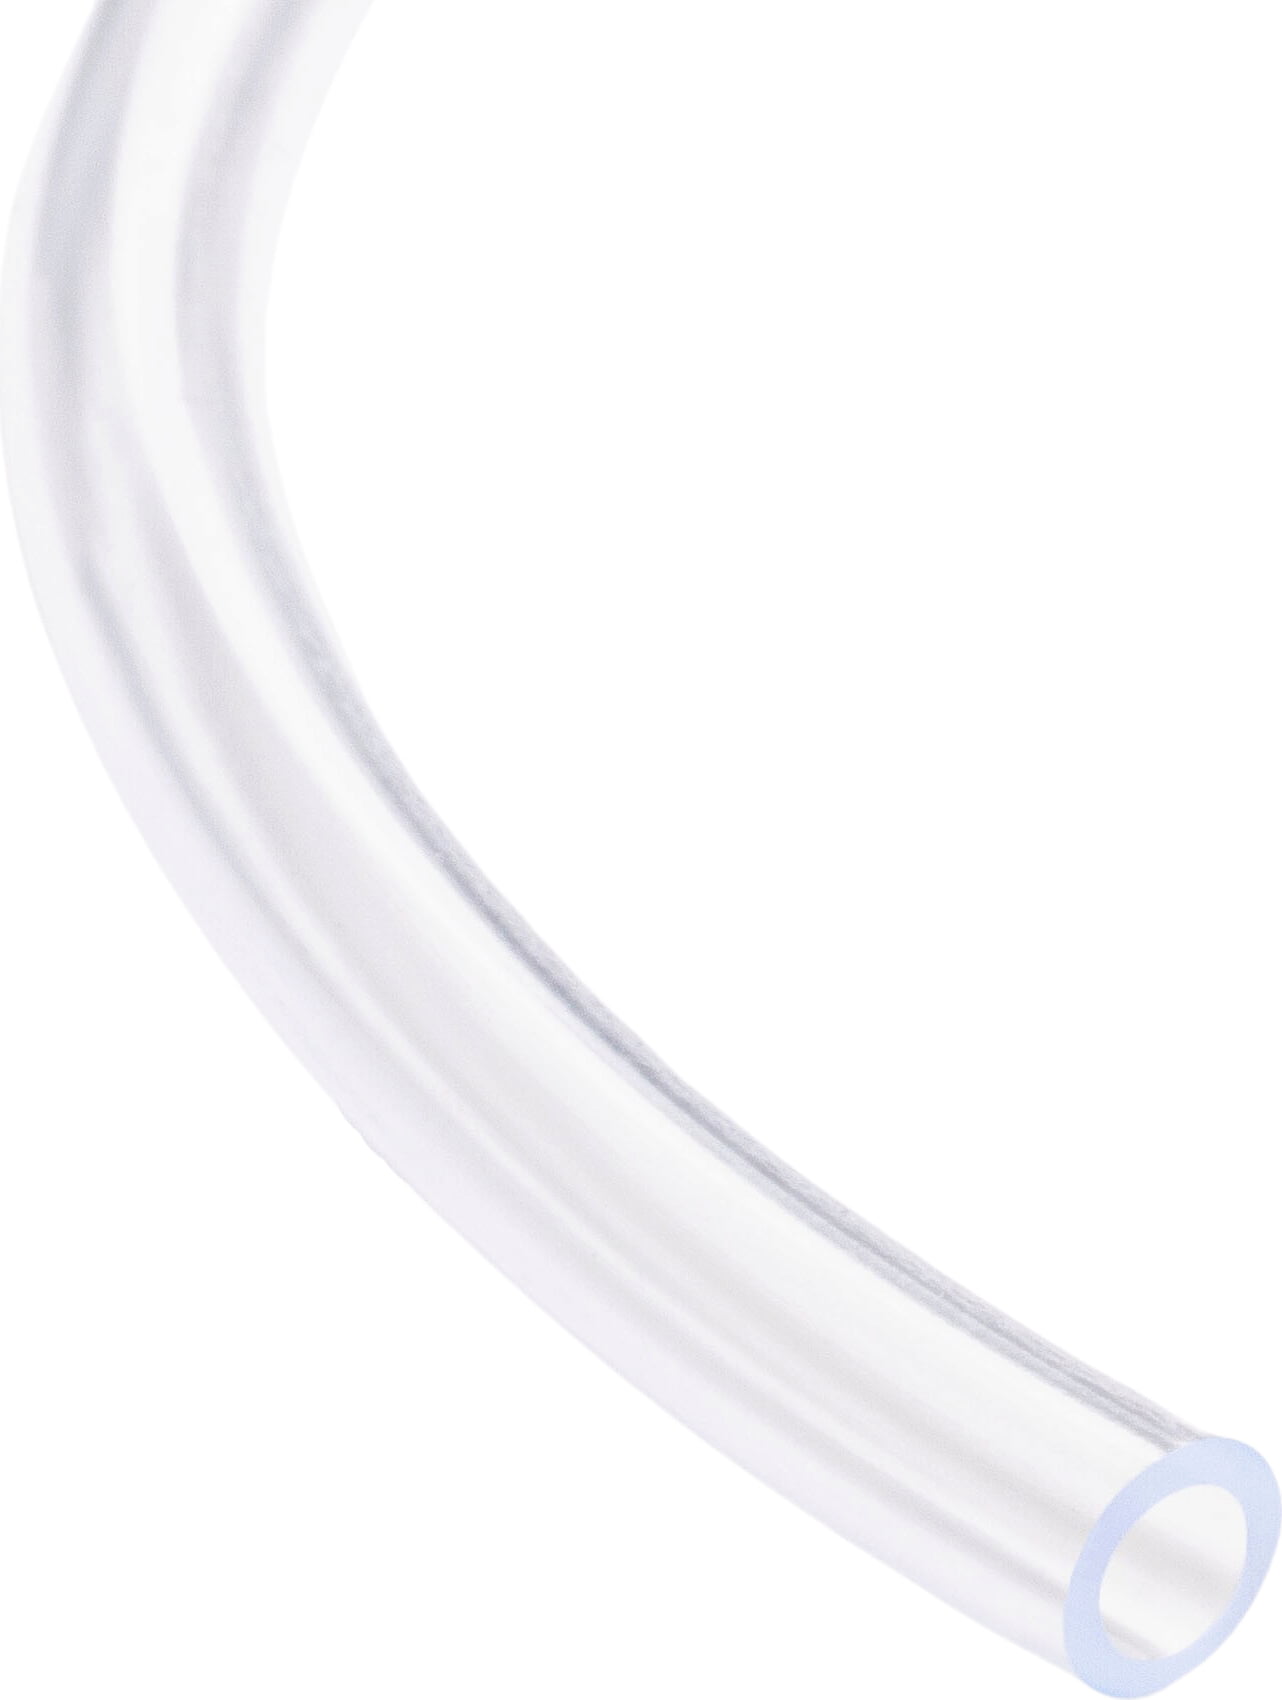 ARKA PVC Tubing 4/6 mm - Transparent - Olibetta Online Shop